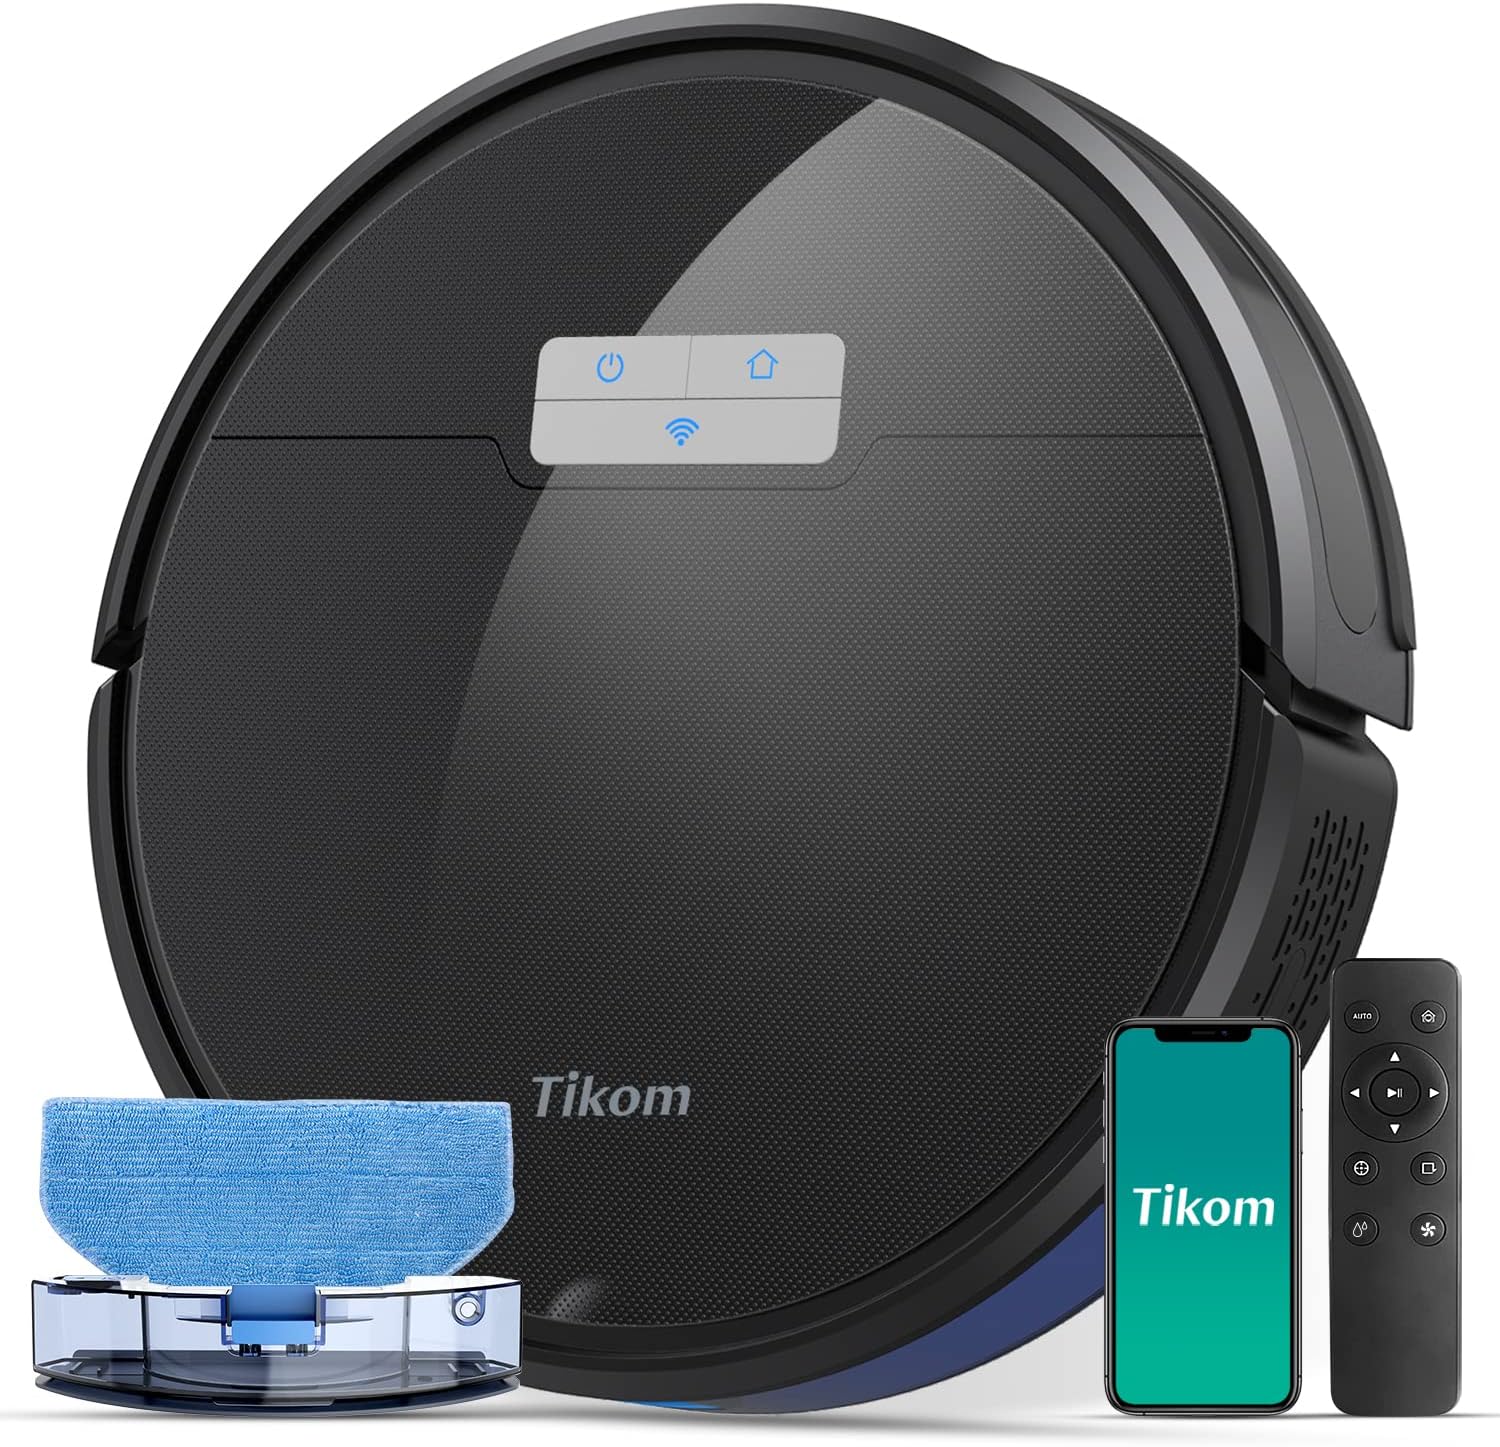 Tikom G8000 Pro Robot Vacuum Review